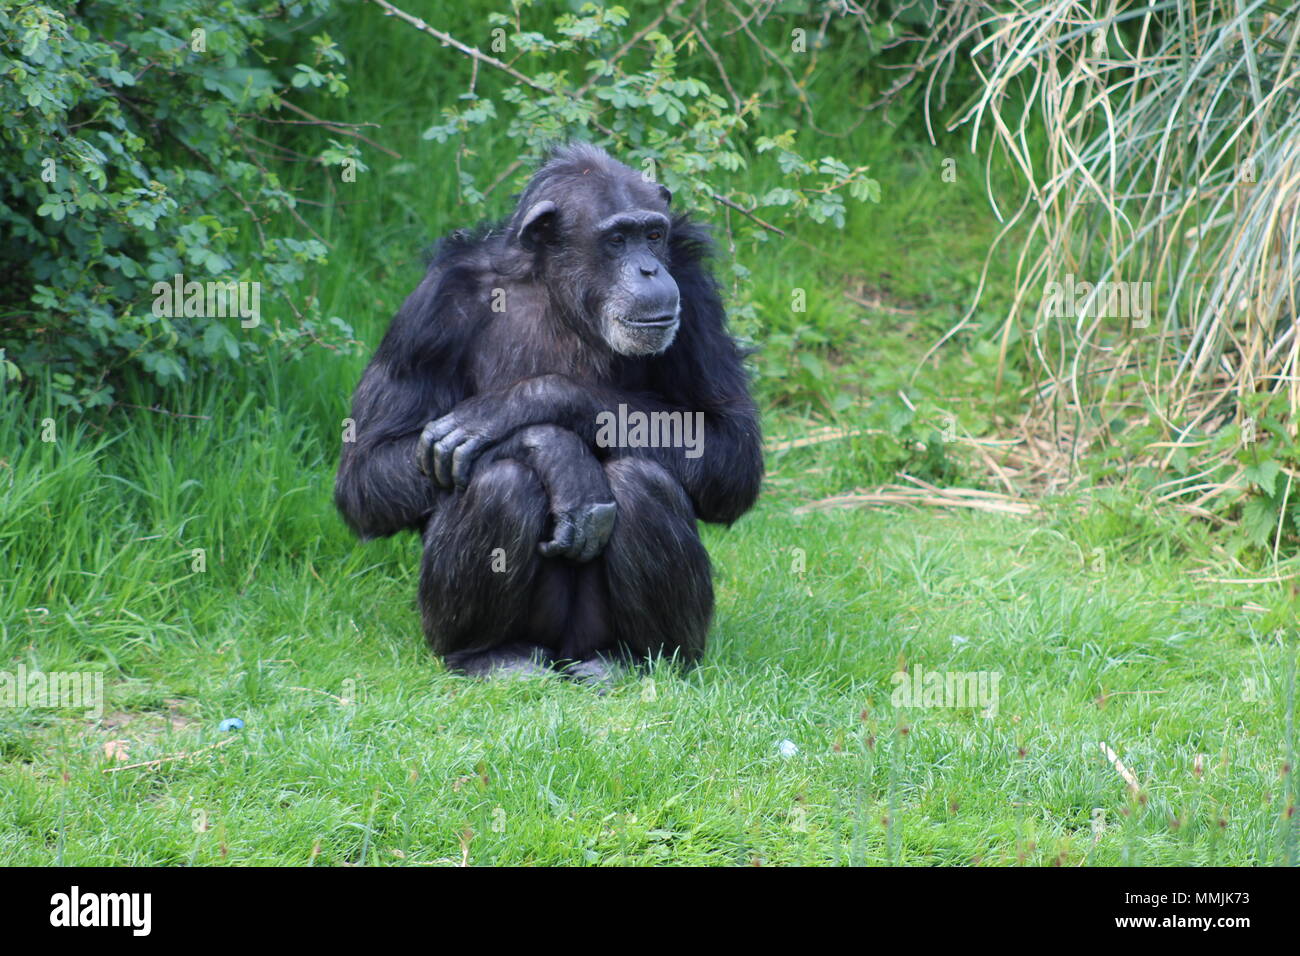 Chimpanzee at Whipsnade Zoo Stock Photo